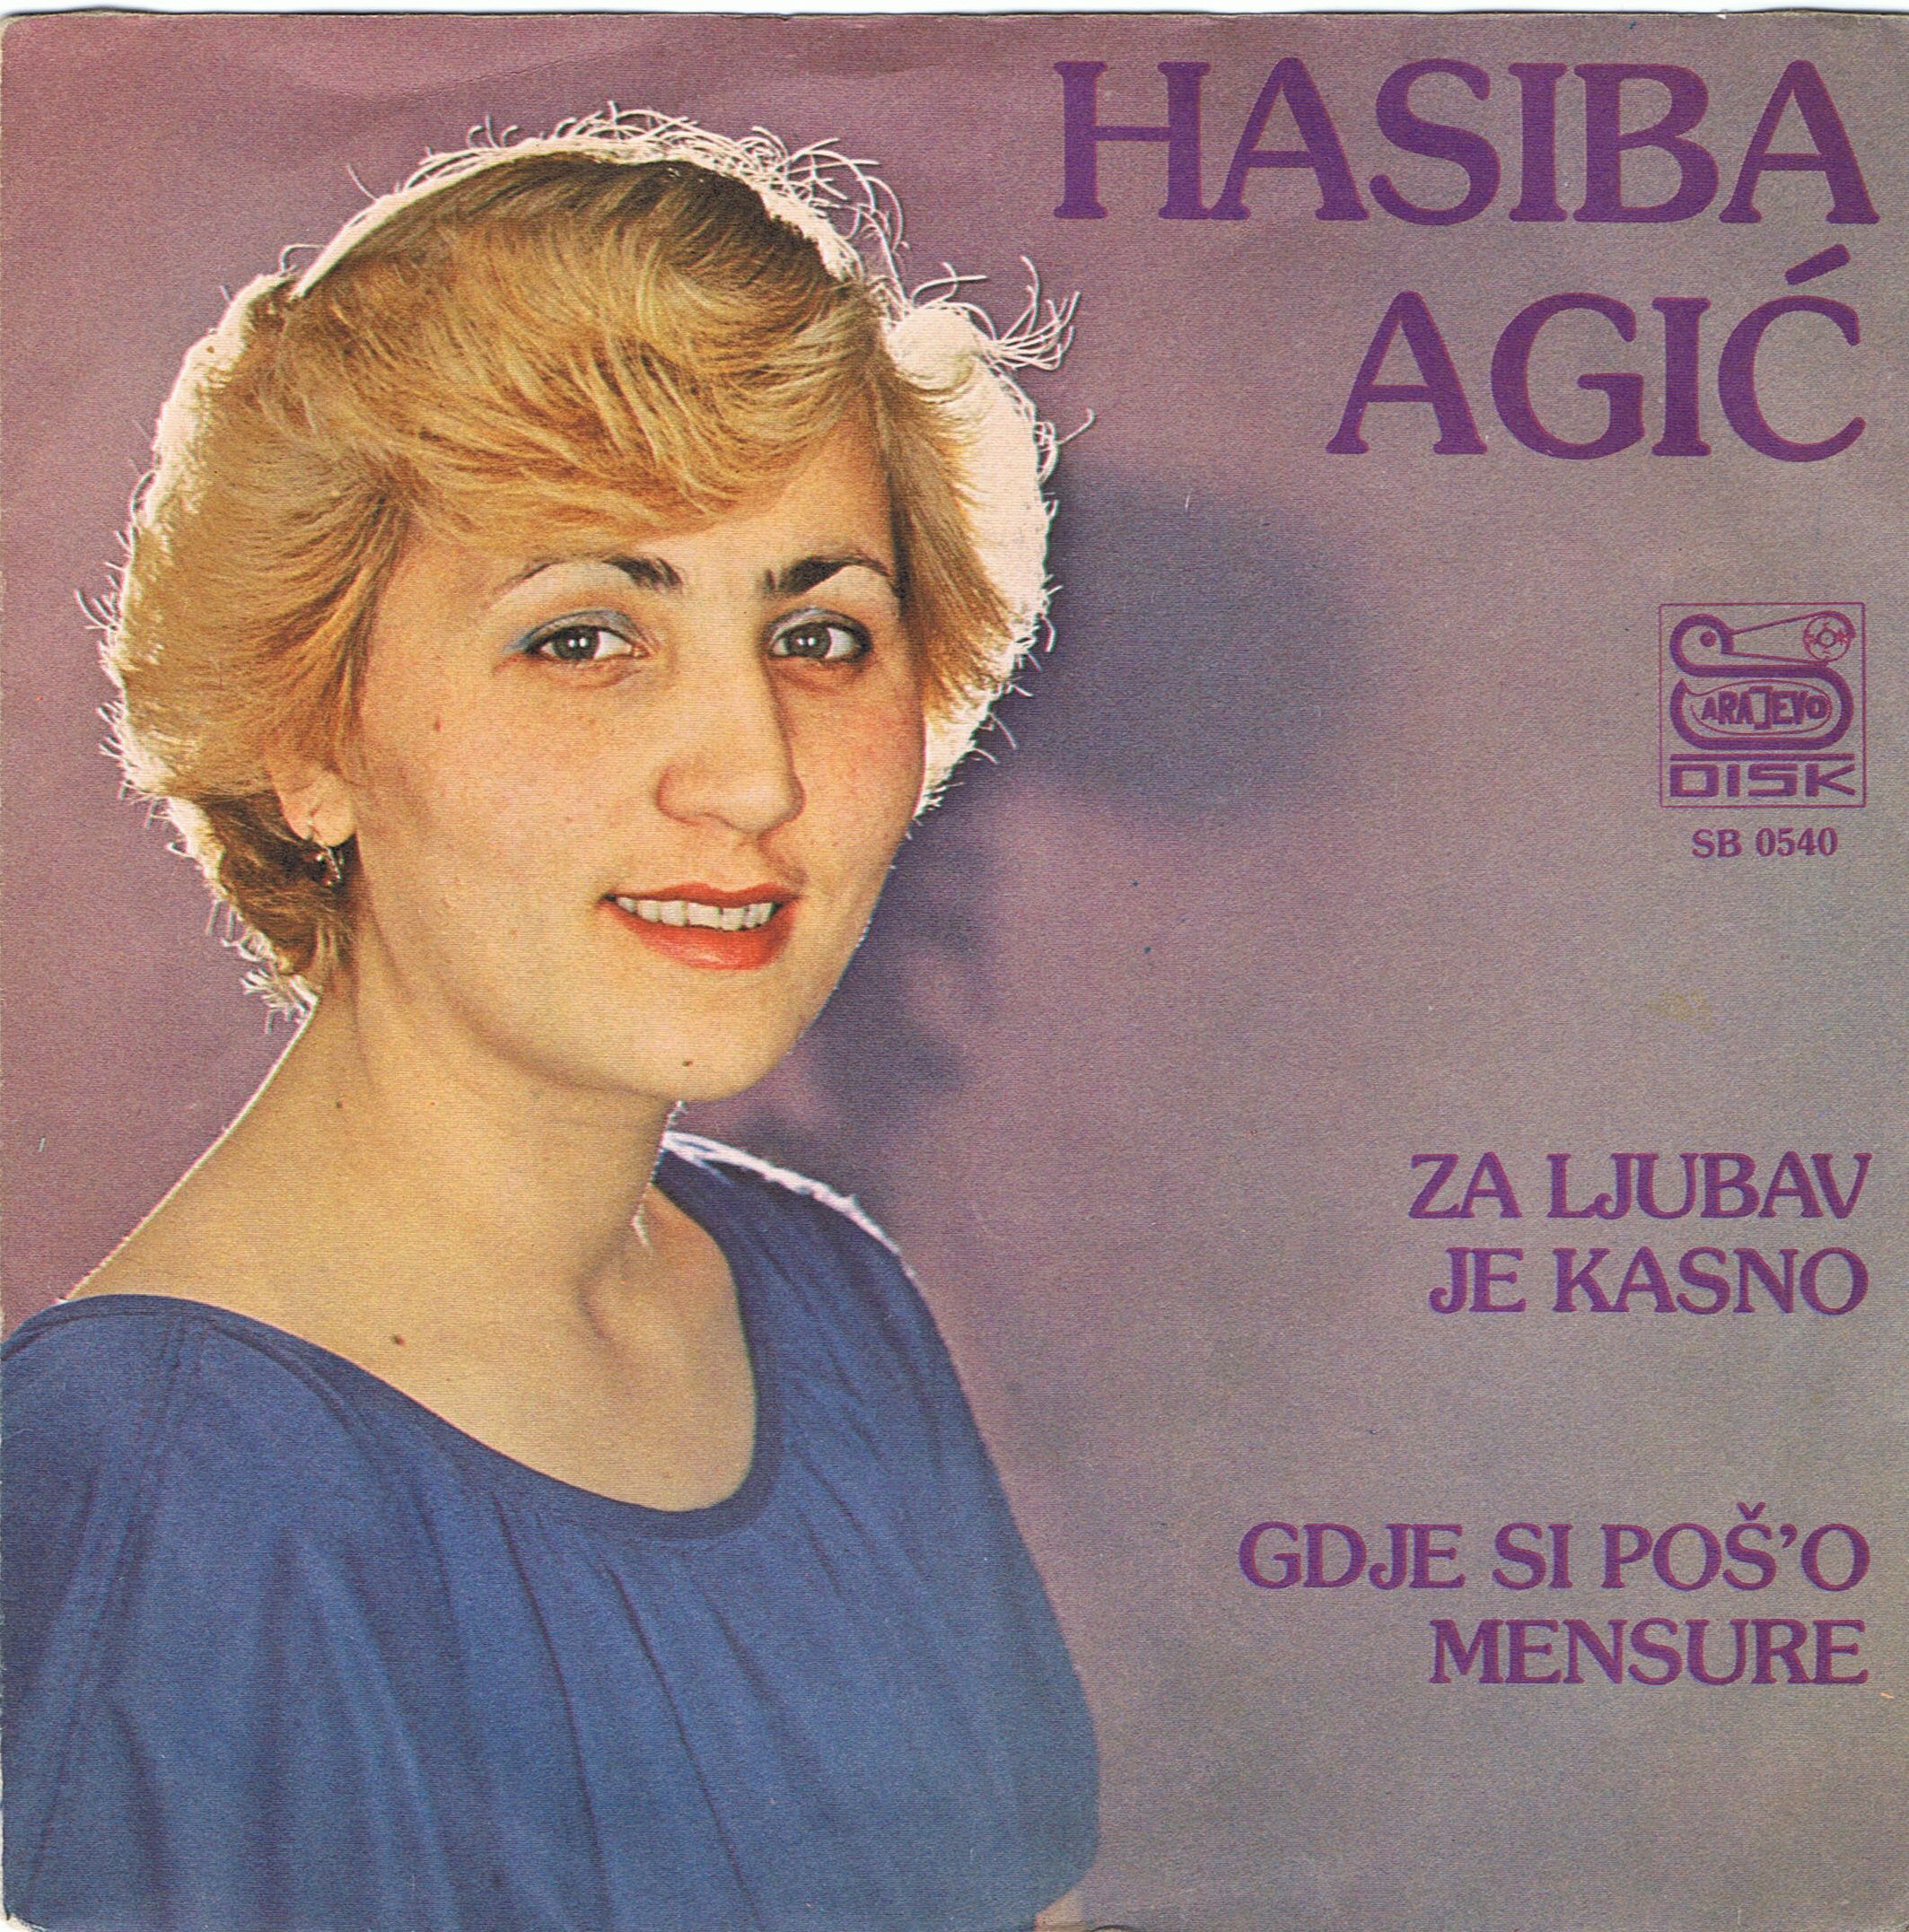 Hasiba Agic 1981 Prednja 03 06 1981